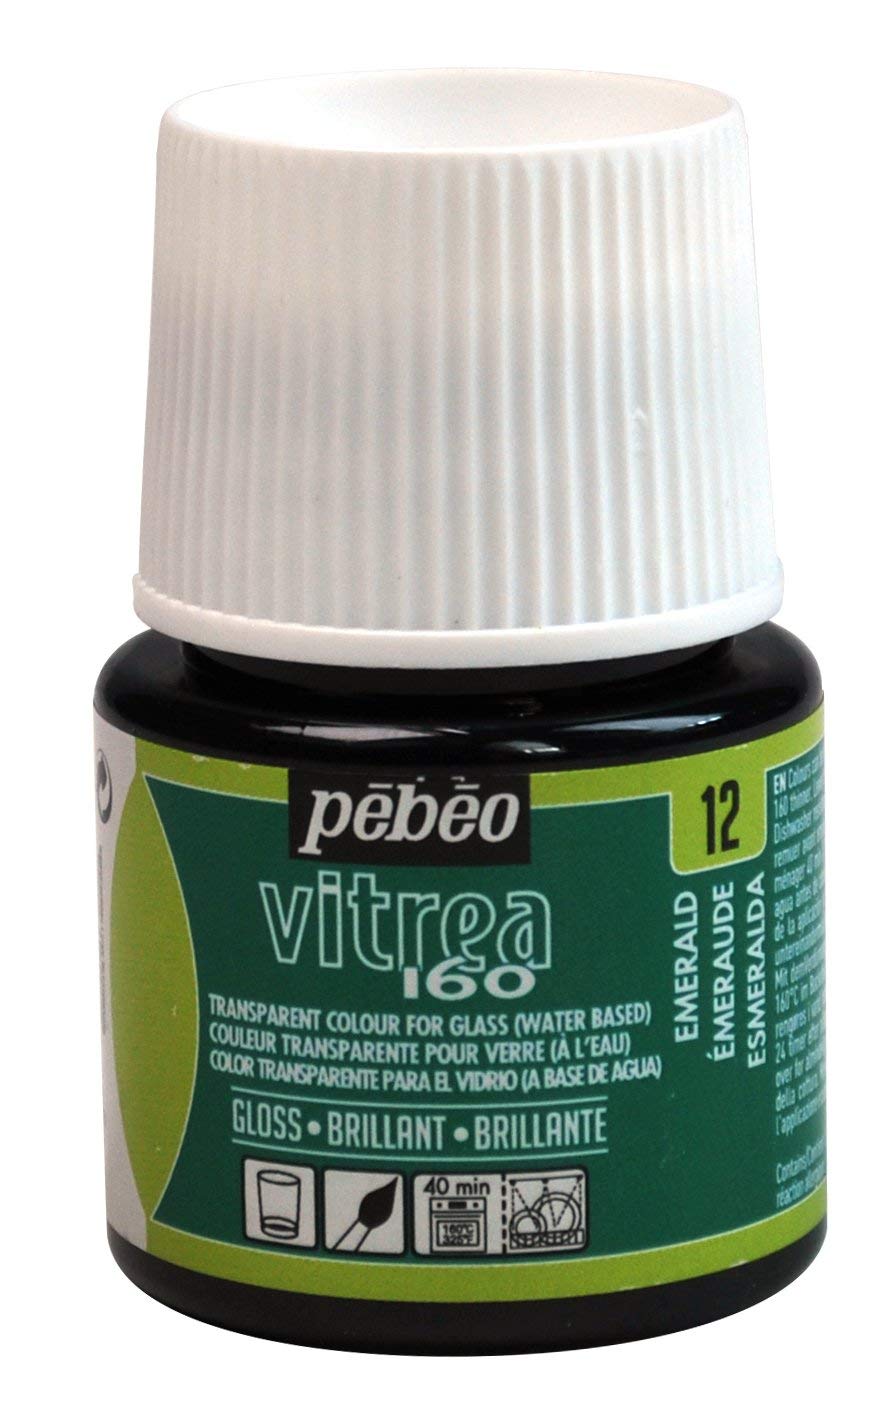 Pebeo Vitrea 160 Paint - Wyndham Art Supplies